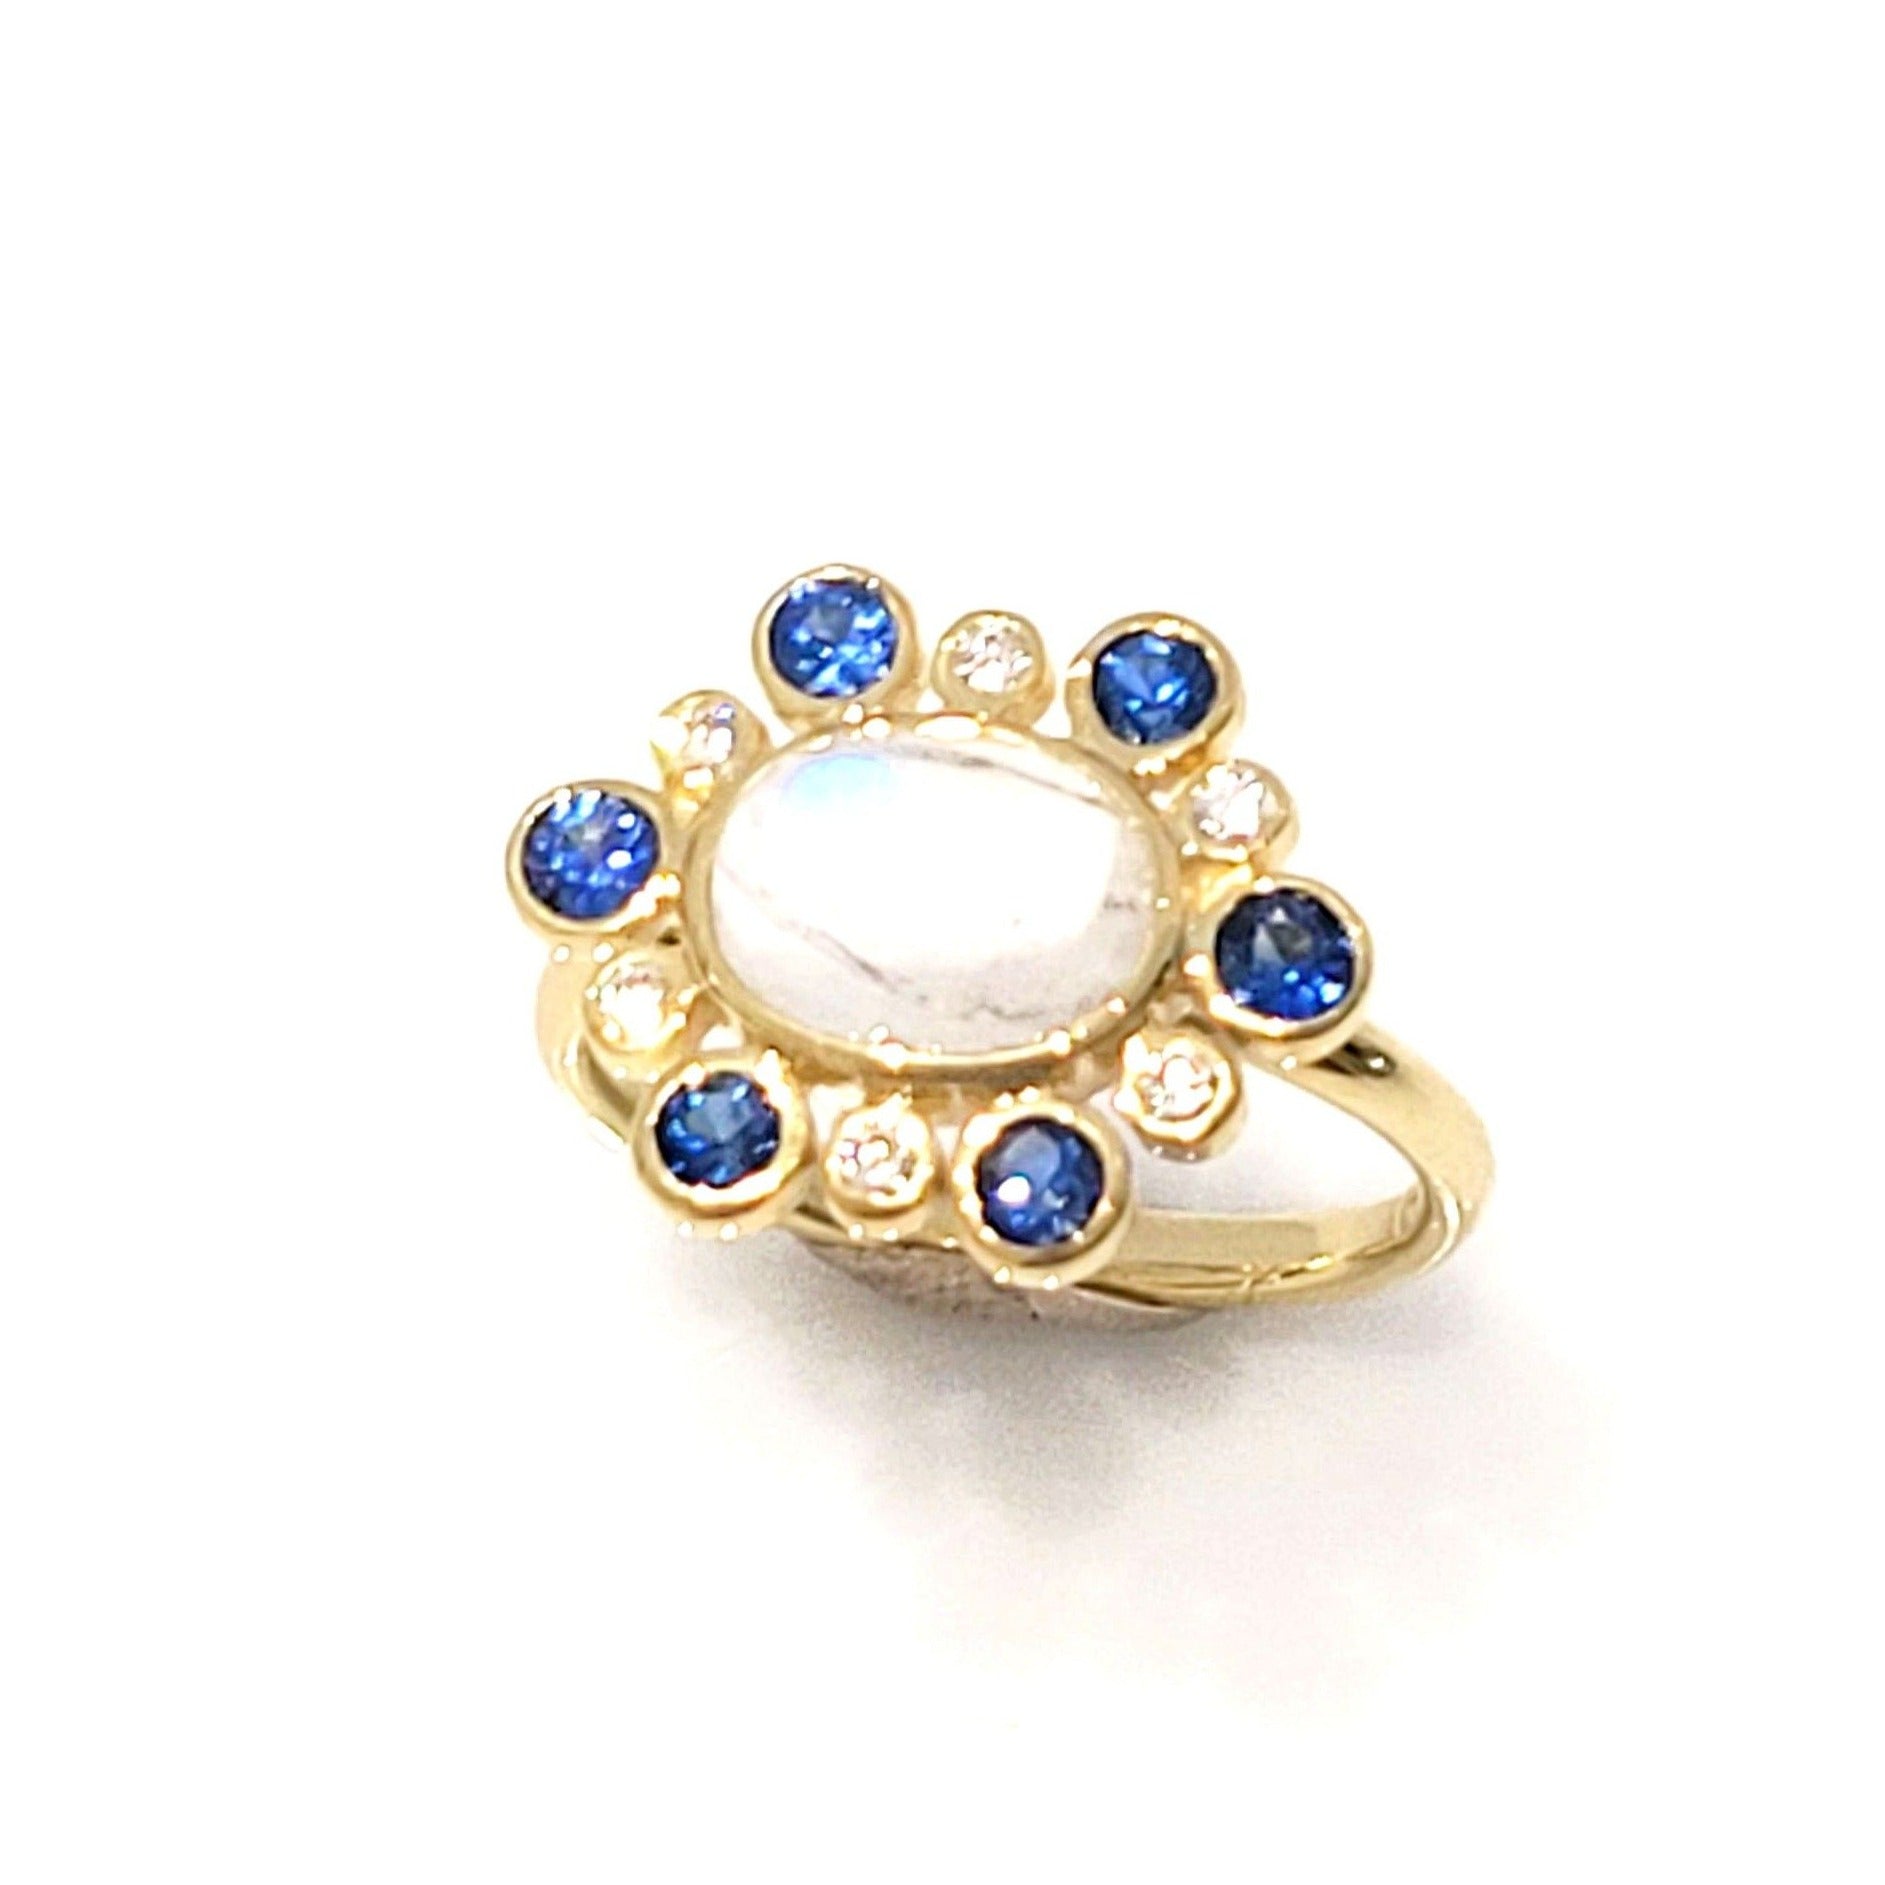 Rainbow Moonstone, Blue Sapphire, and Diamond Ring